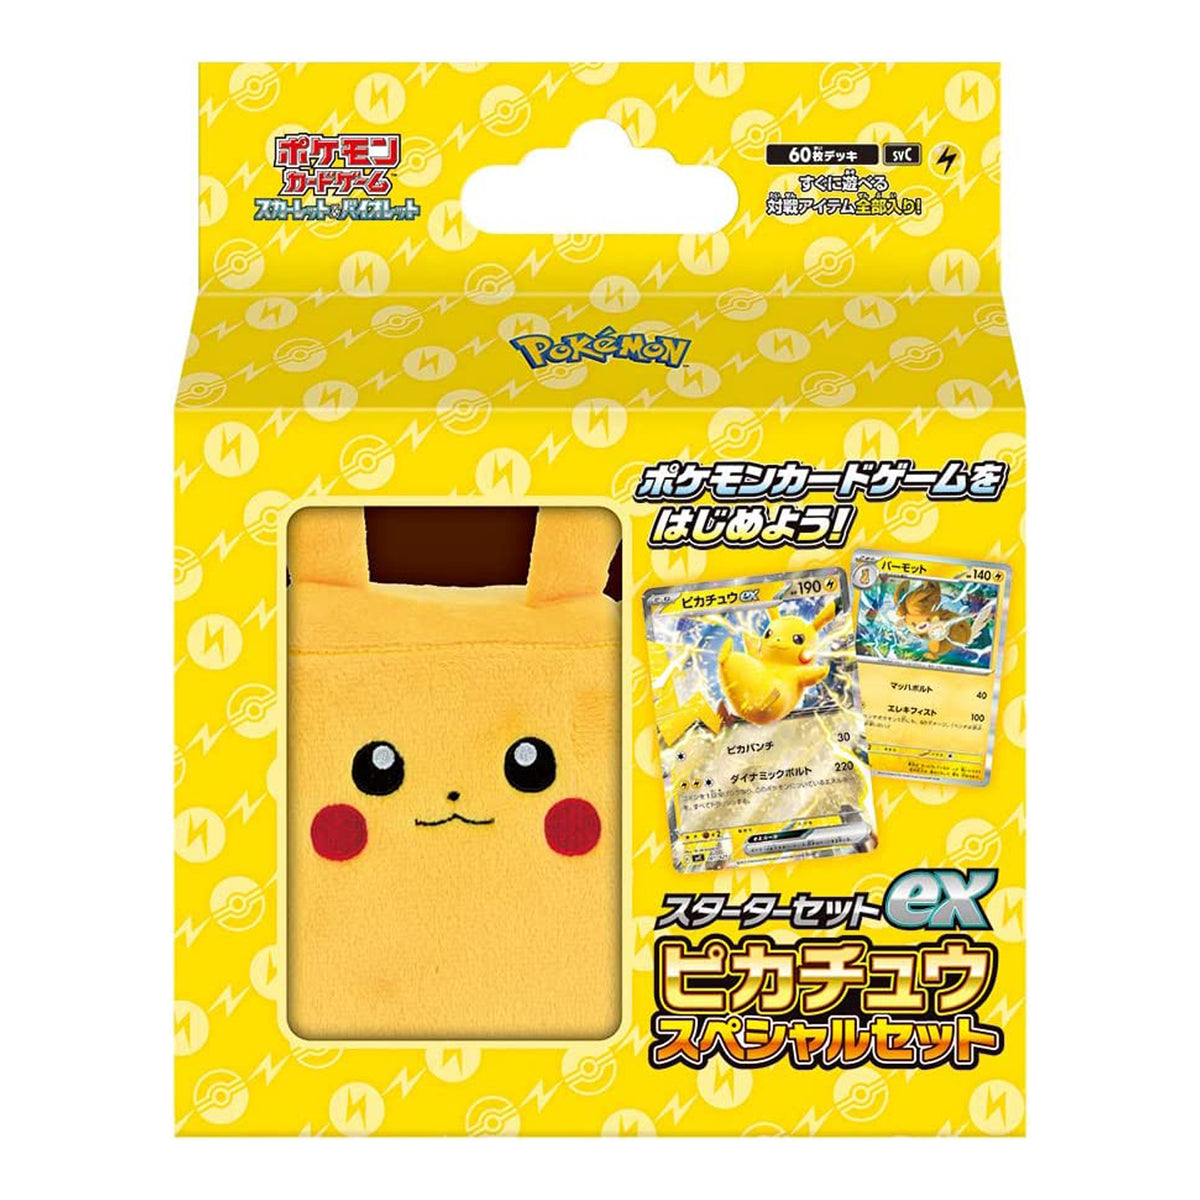 Special Pikachu ex Starter Set - JPN